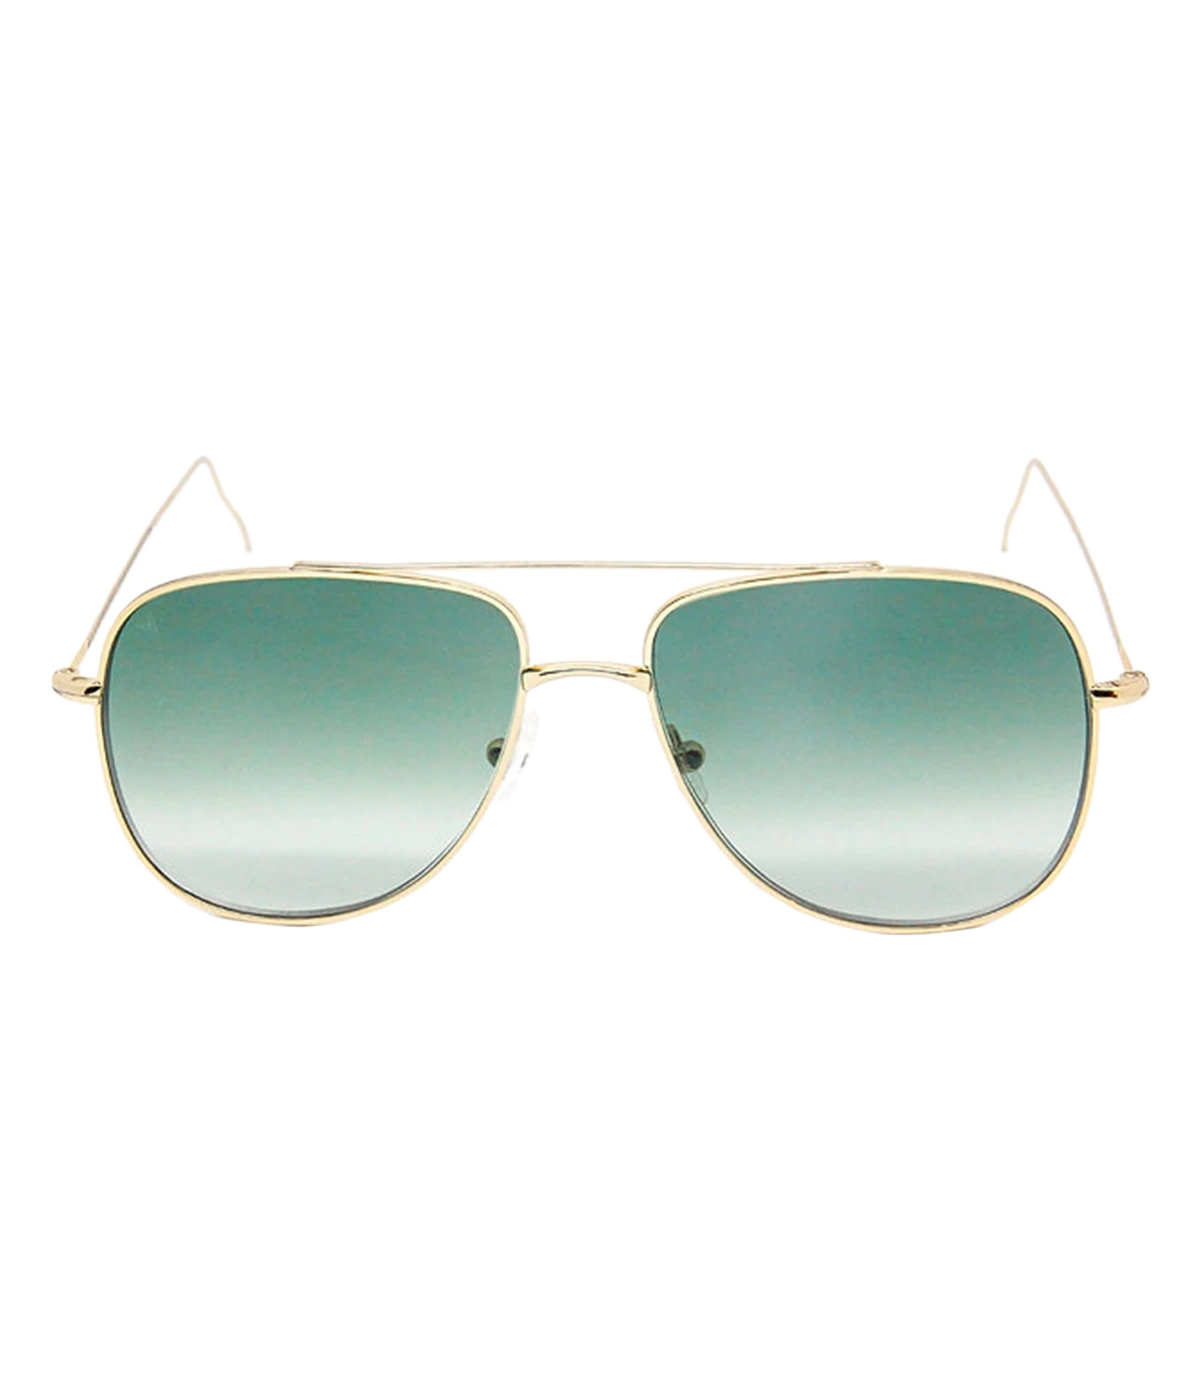 Danny Sunglasses in Shiny Gold & Green